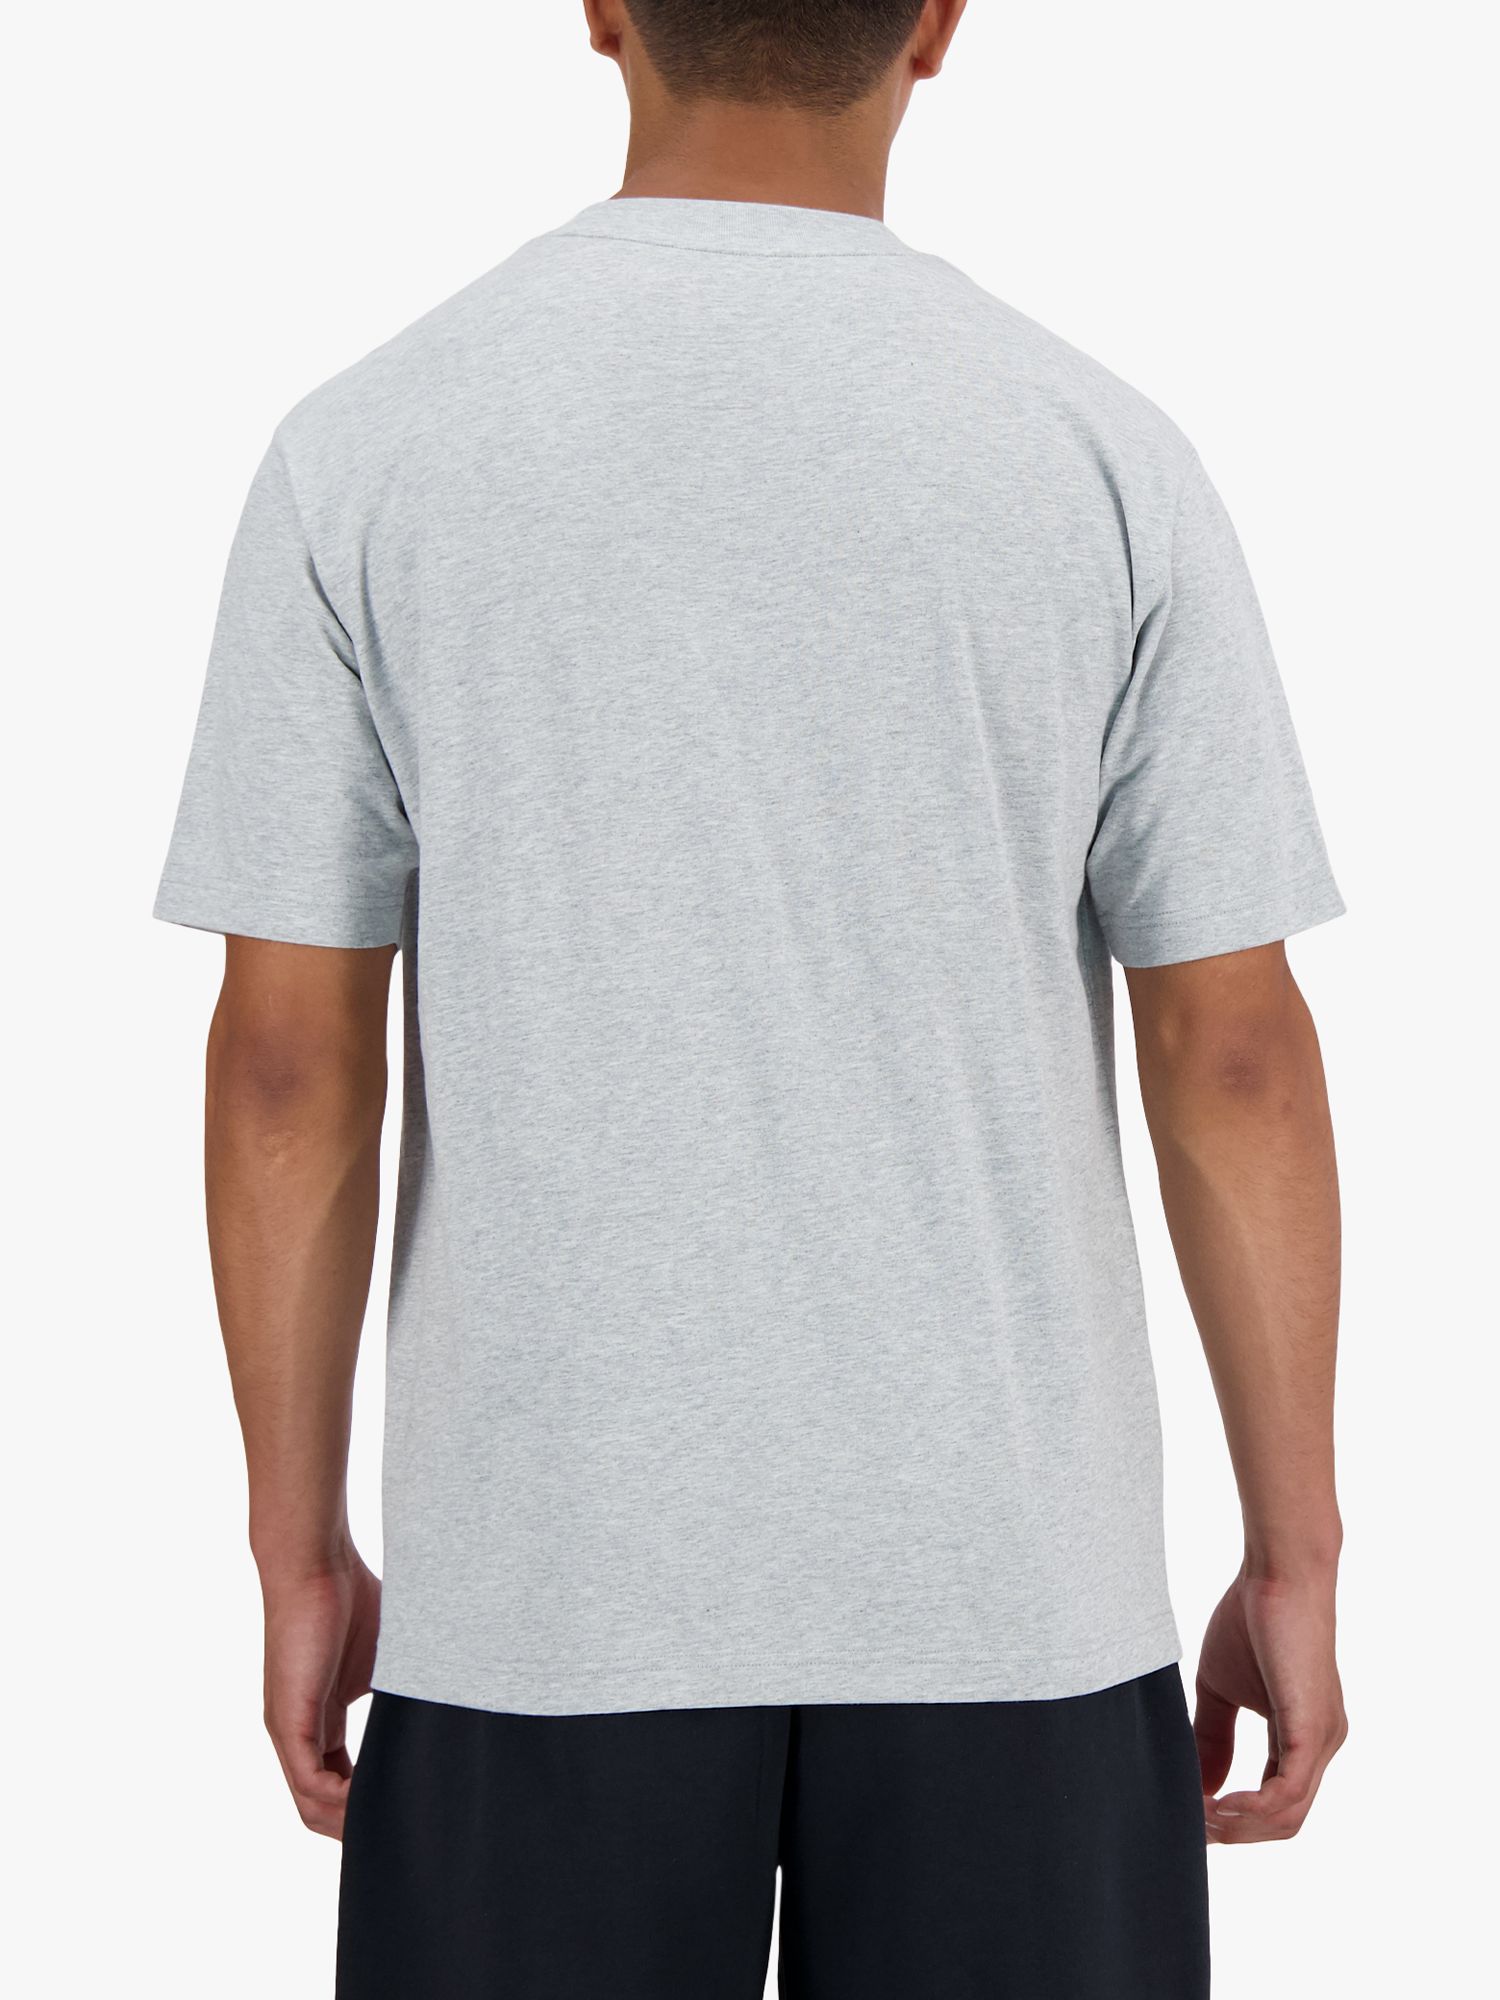 New Balance Small Logo T-Shirt, Grey, S